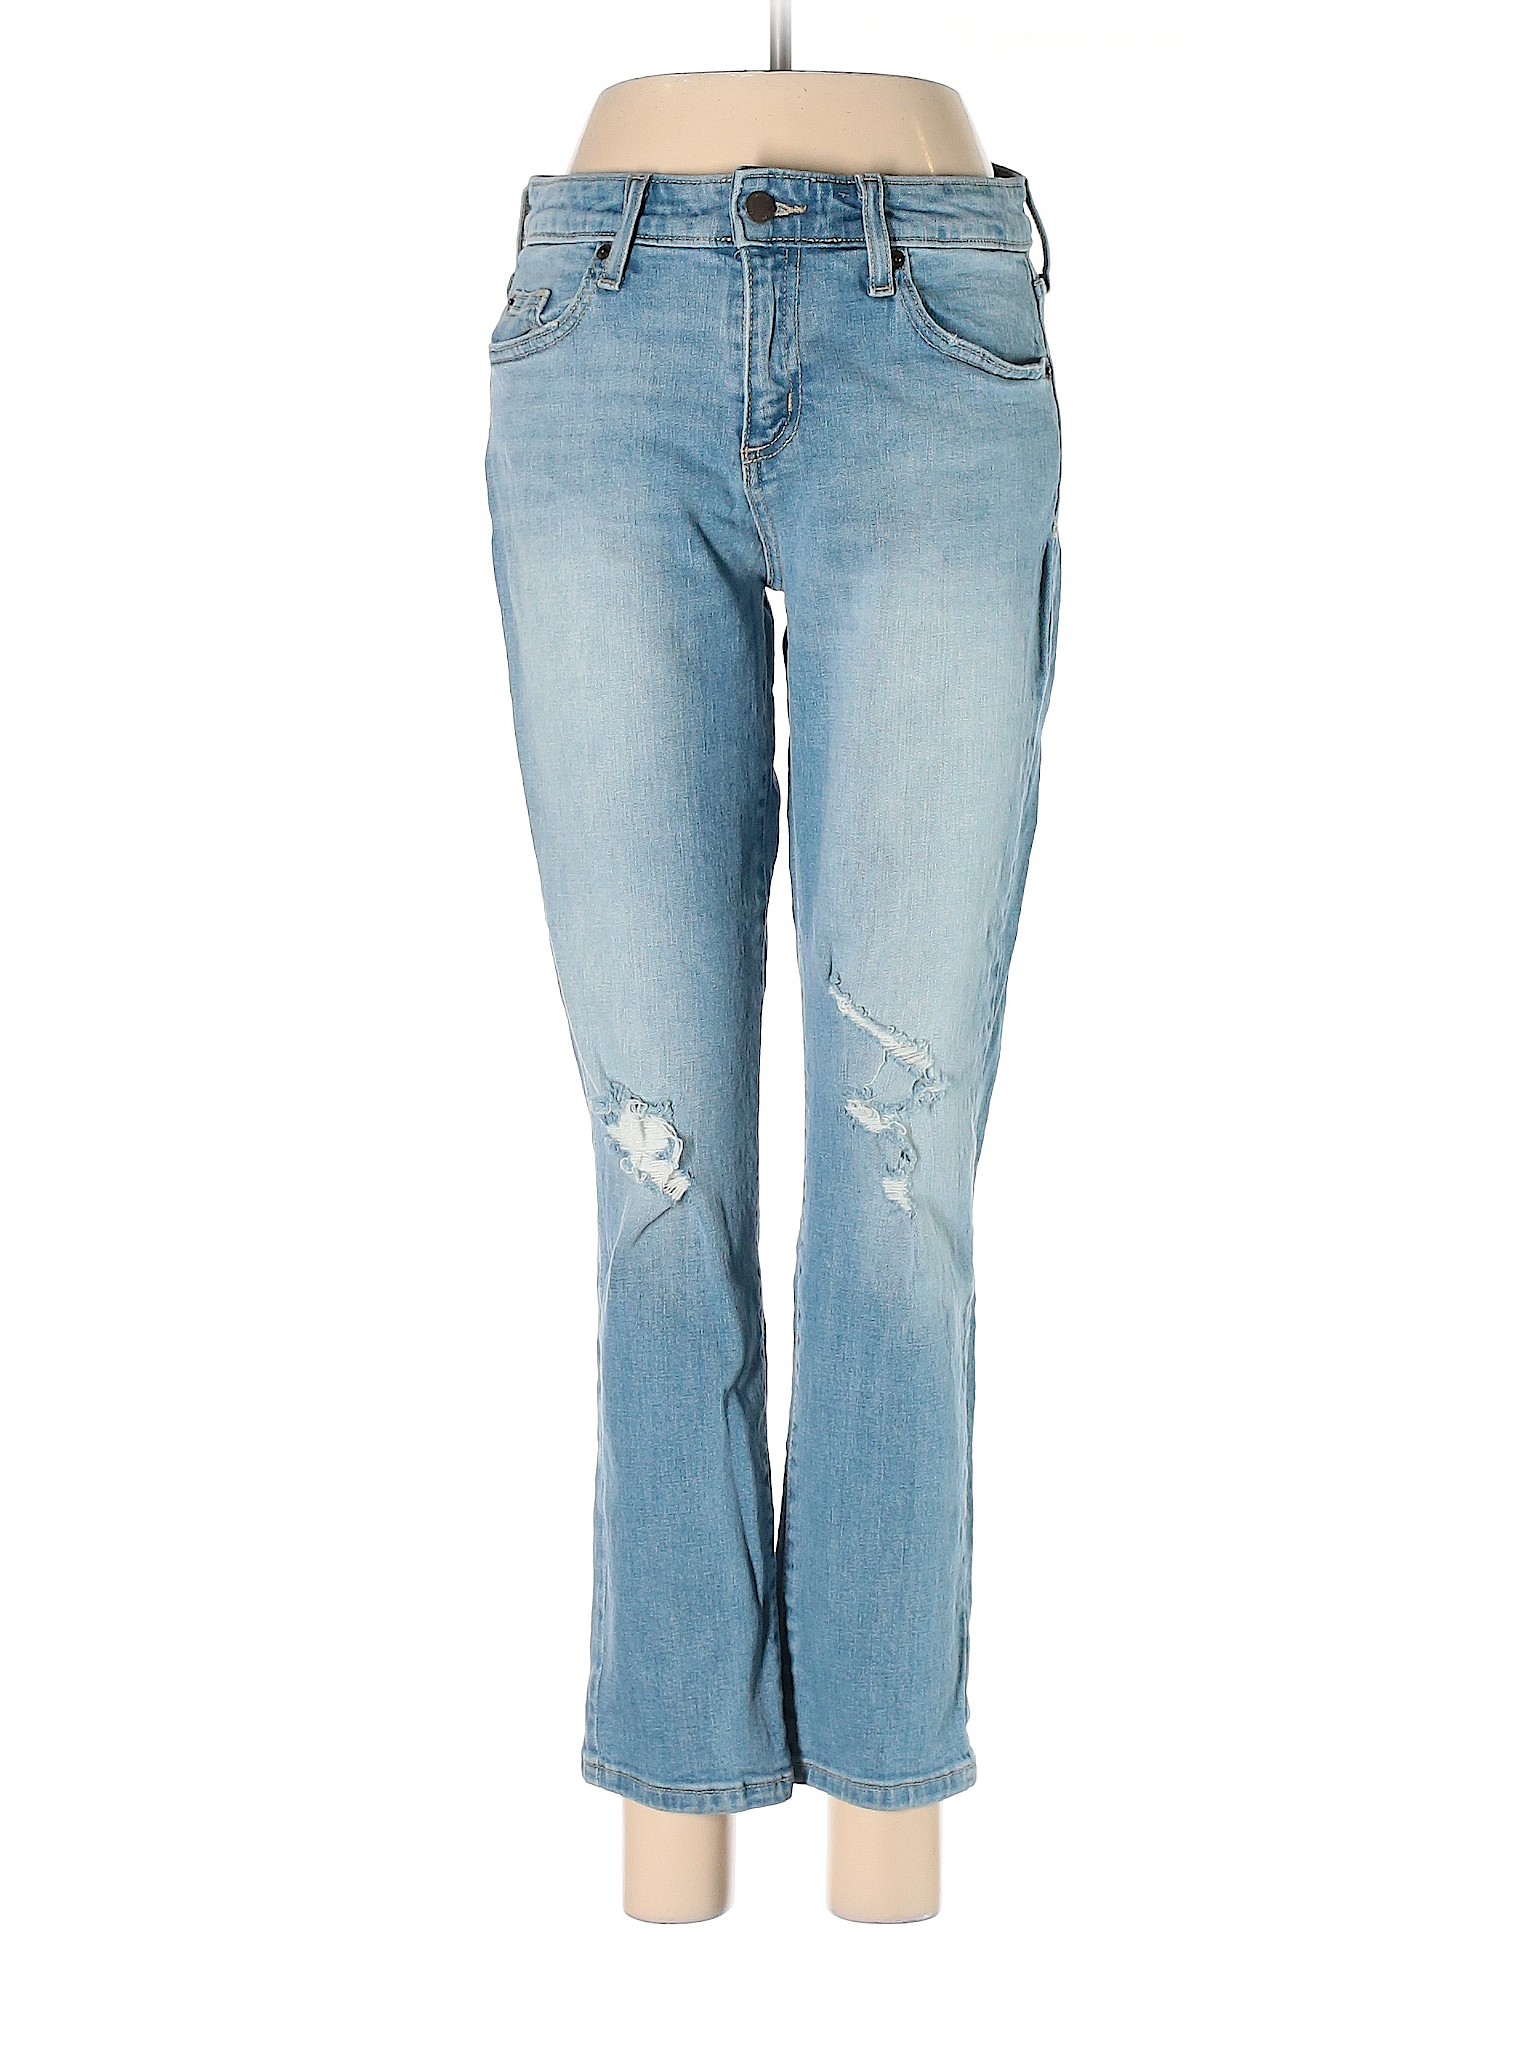 Universal Thread Women Blue Jeans 4 | eBay